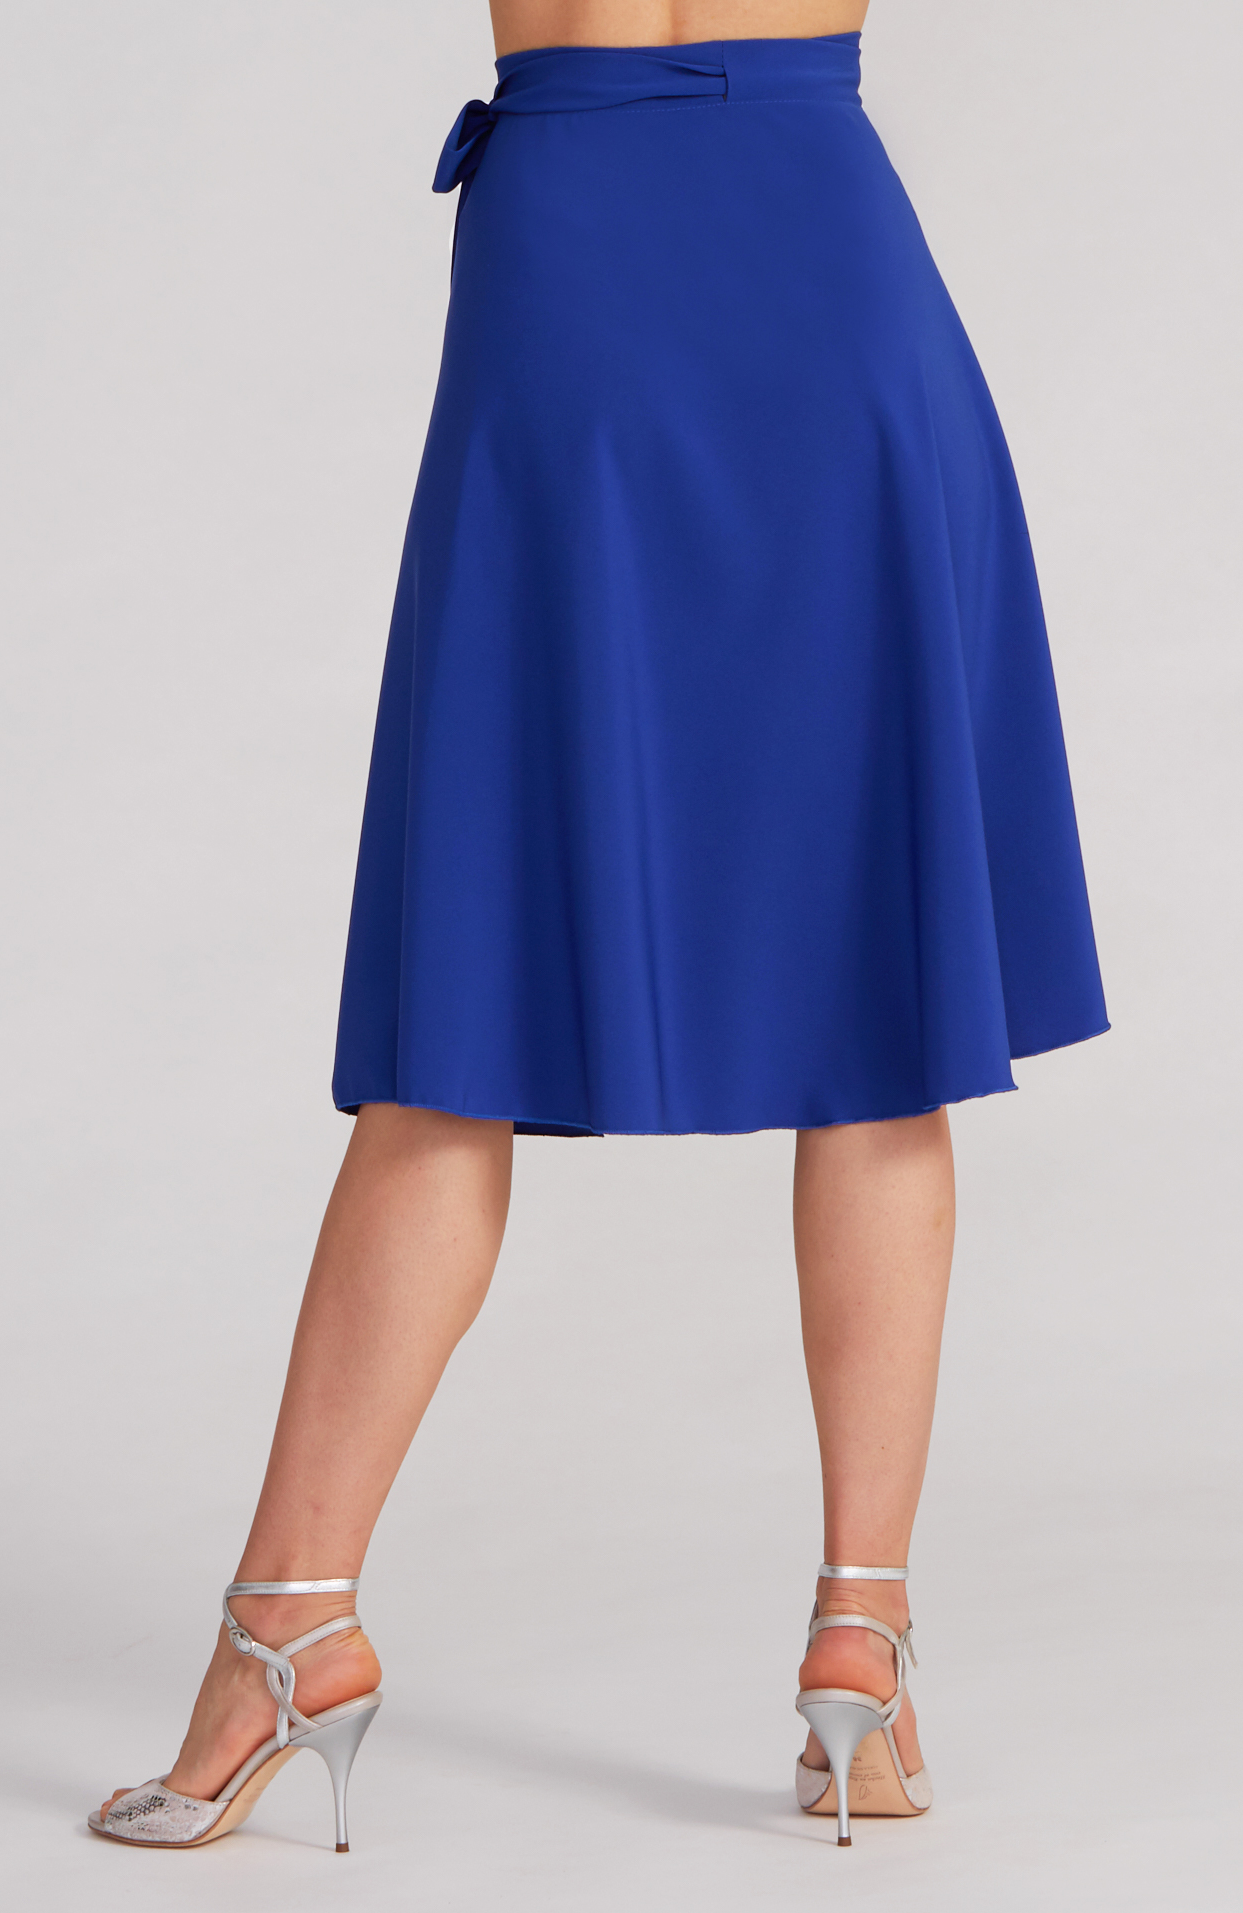 COCO - Royal Blue Wrap Skirt